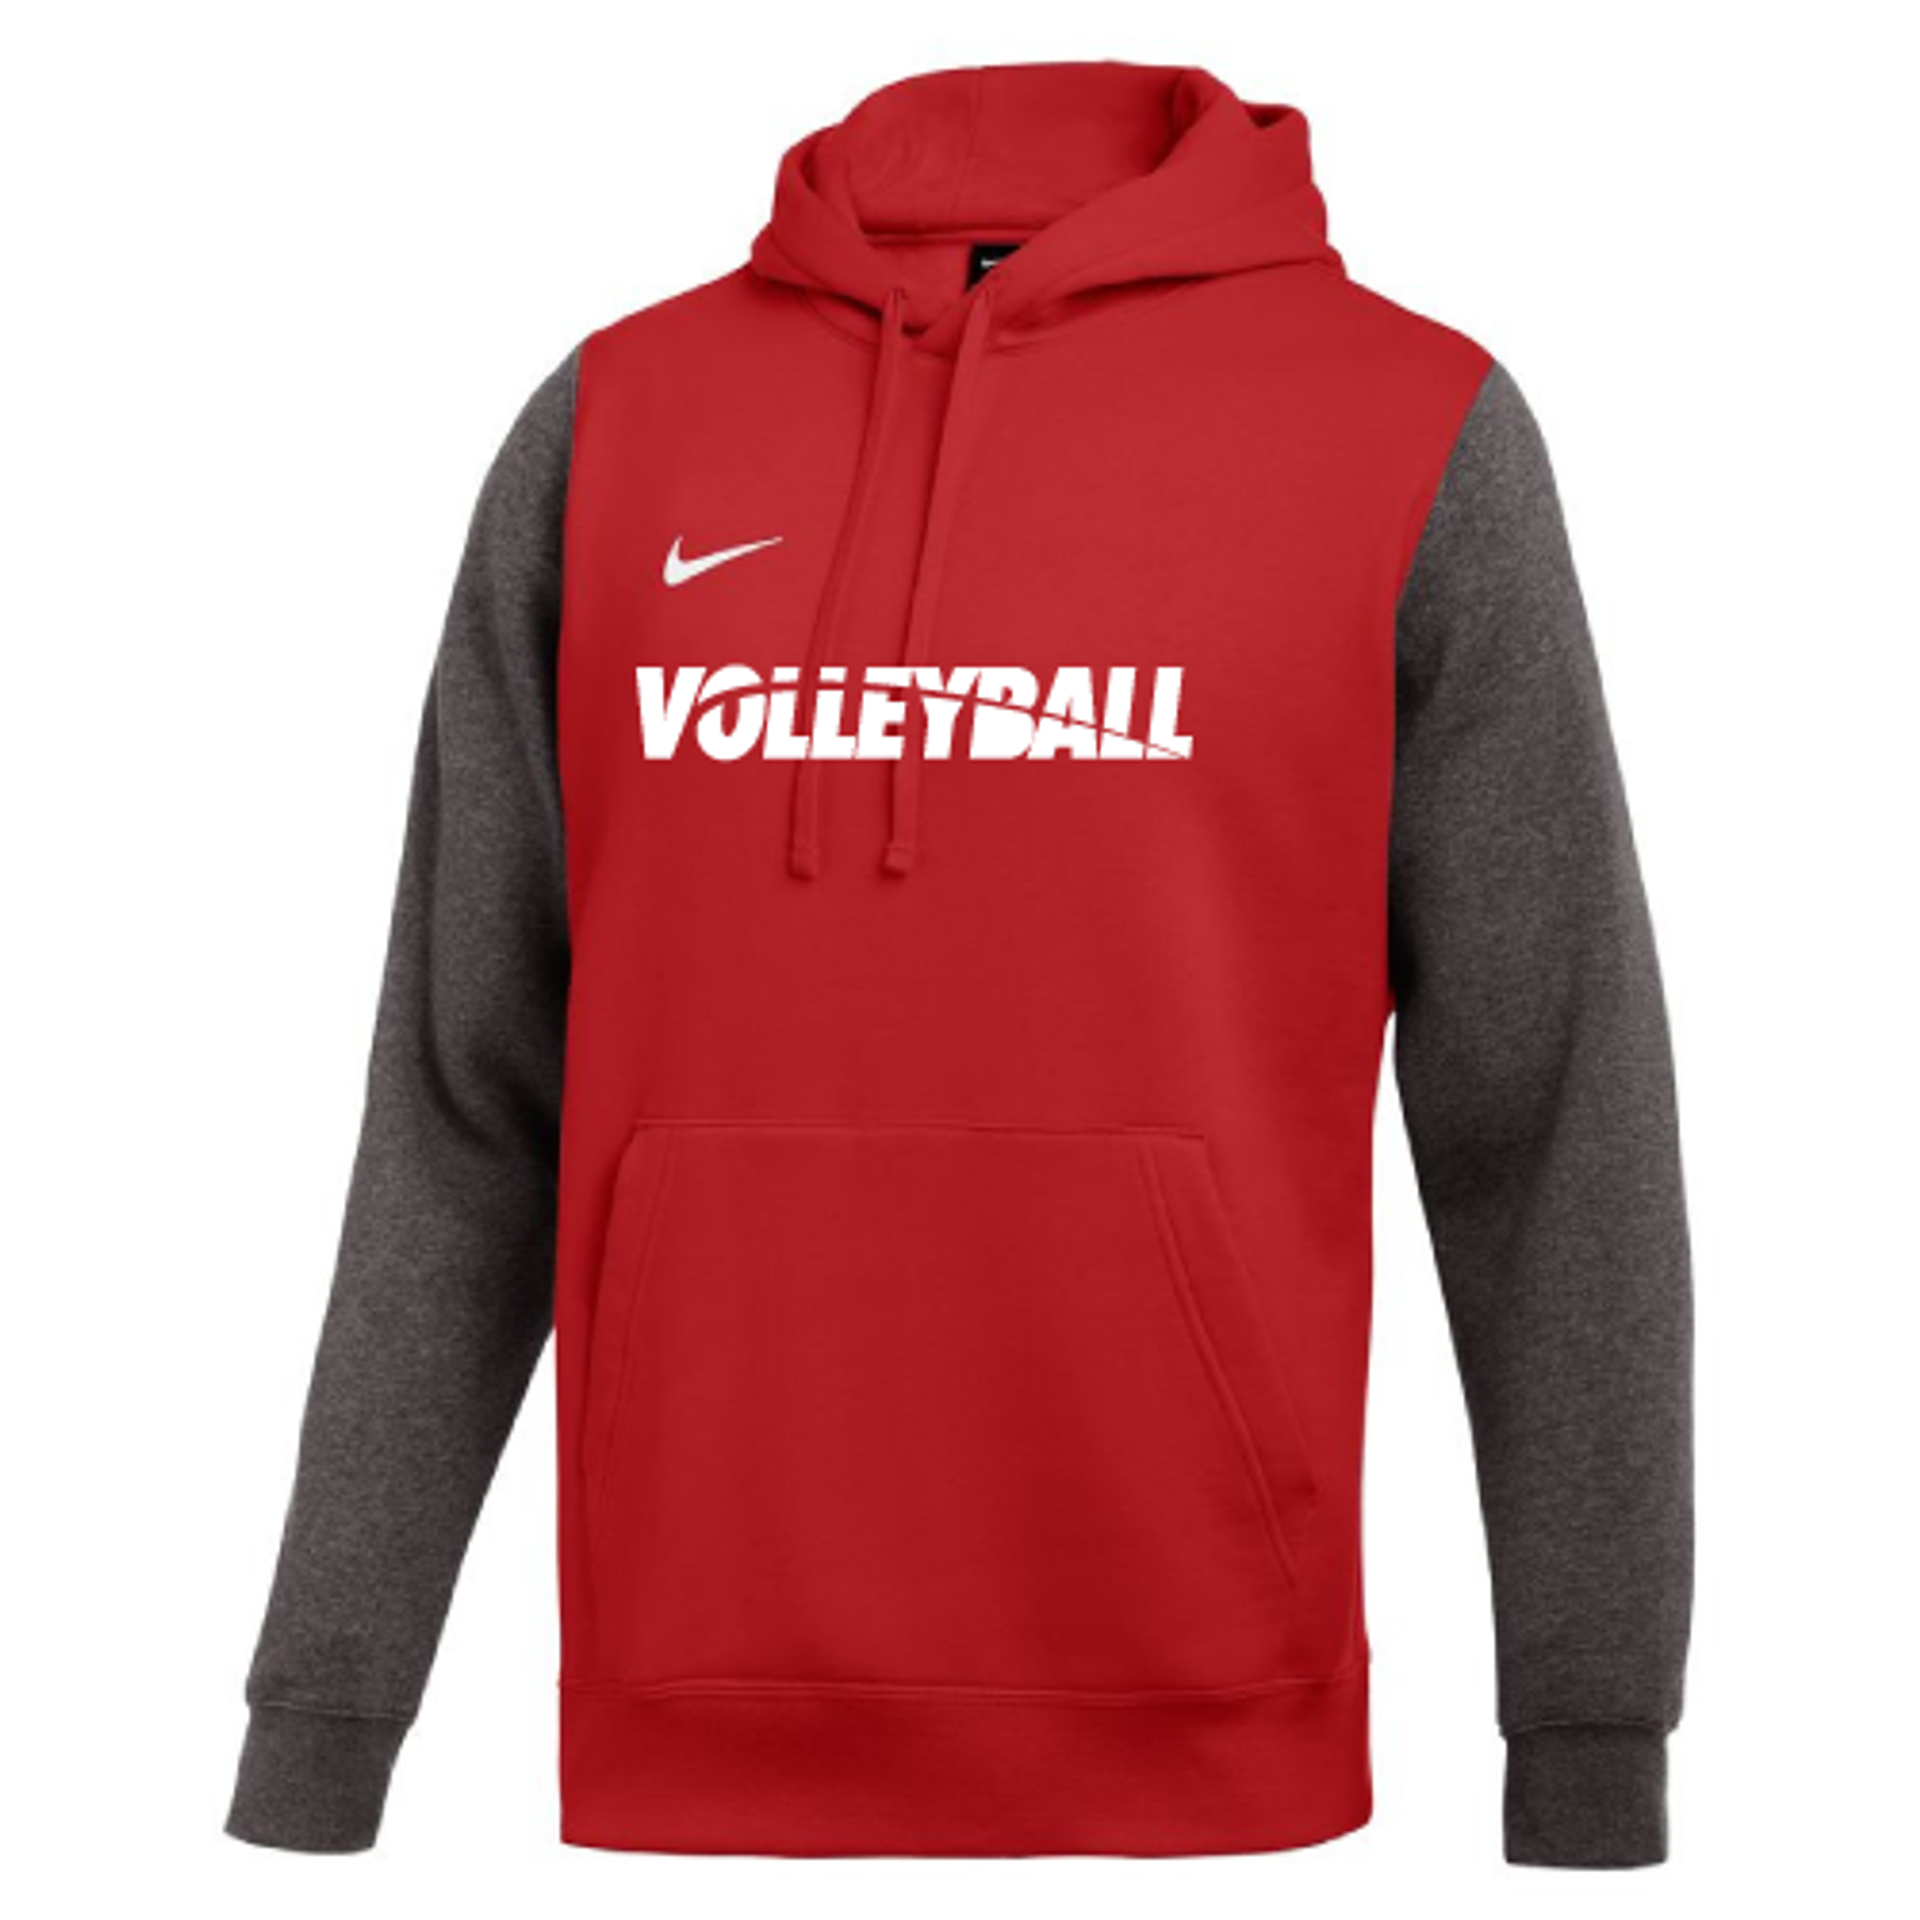 Nike Men's Club Fleece Color Block Hoodie Volleyball - Red/Grey